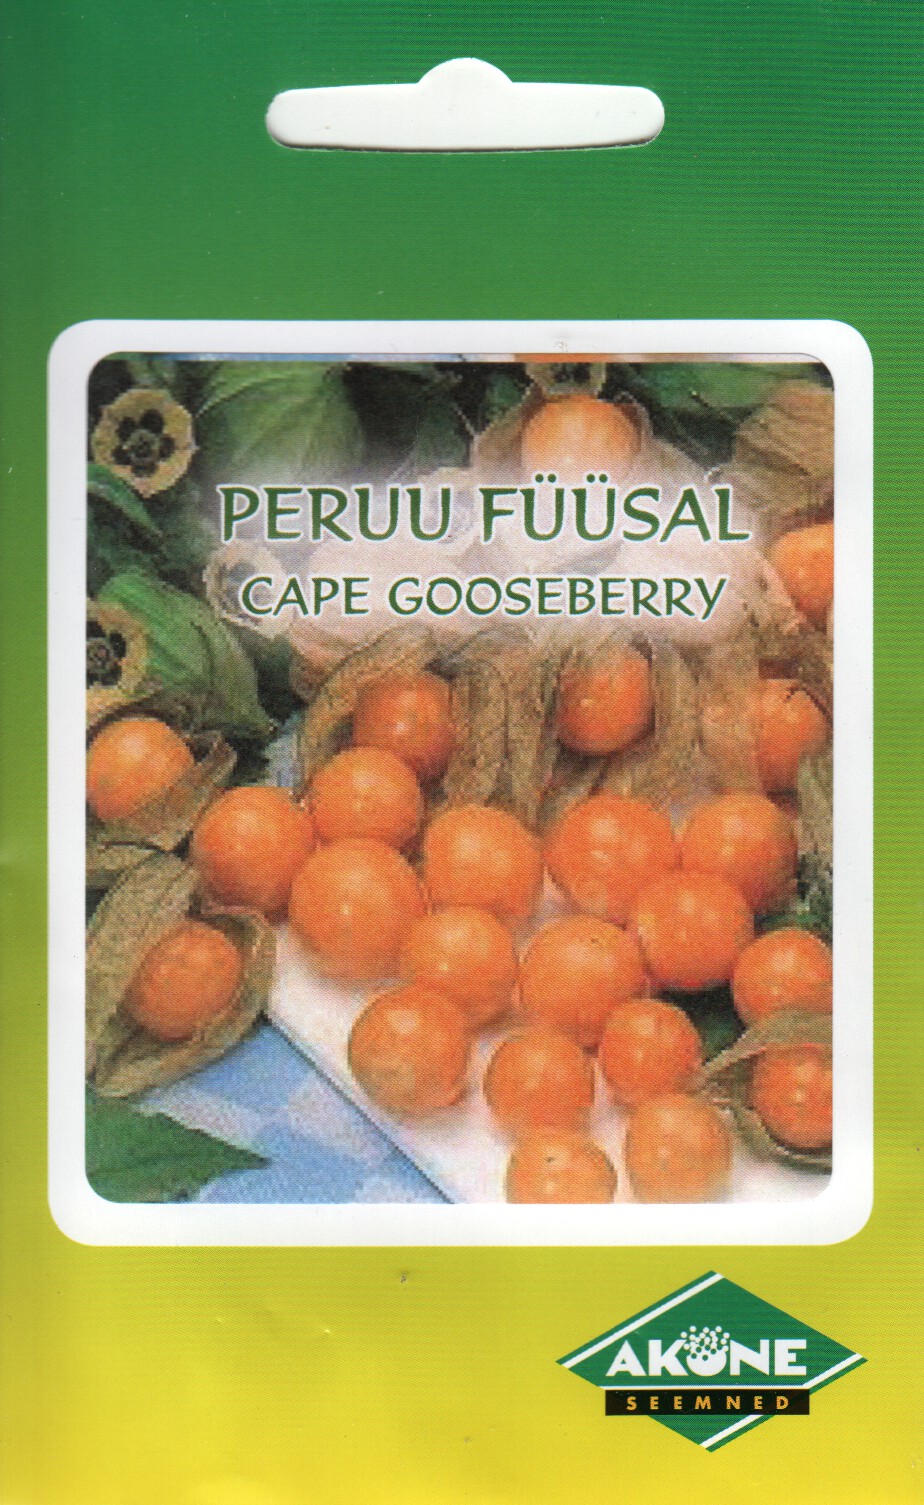 peruu-fuusal-cape-gooseberry